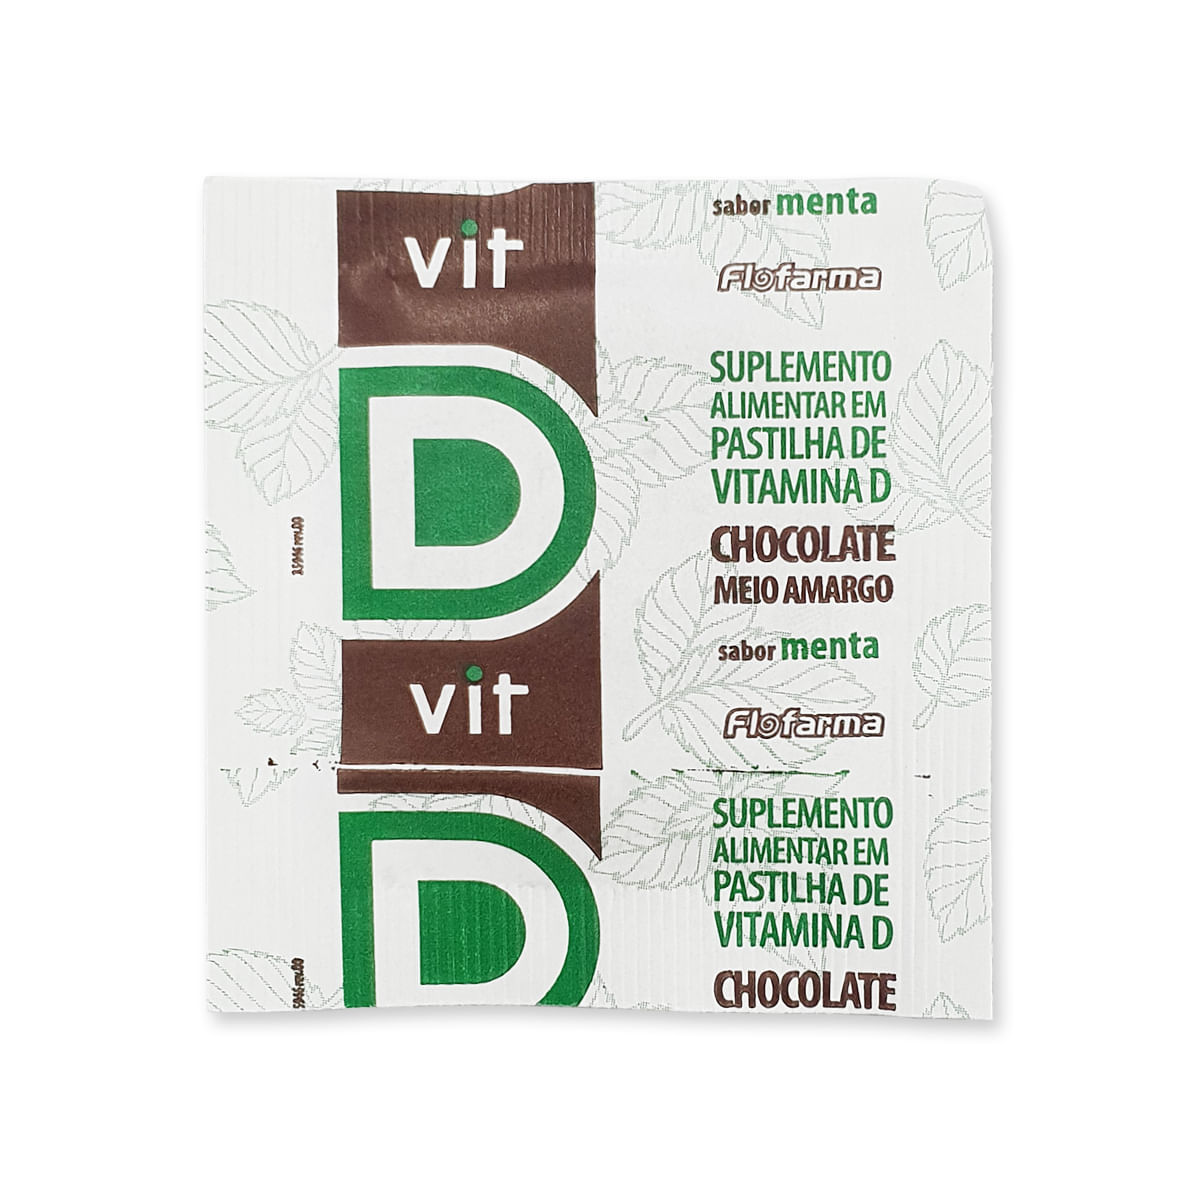 Vit D Pastilha de Chocolate com Vitamina D Suplemento Alimentar 30 unidades Flofarma